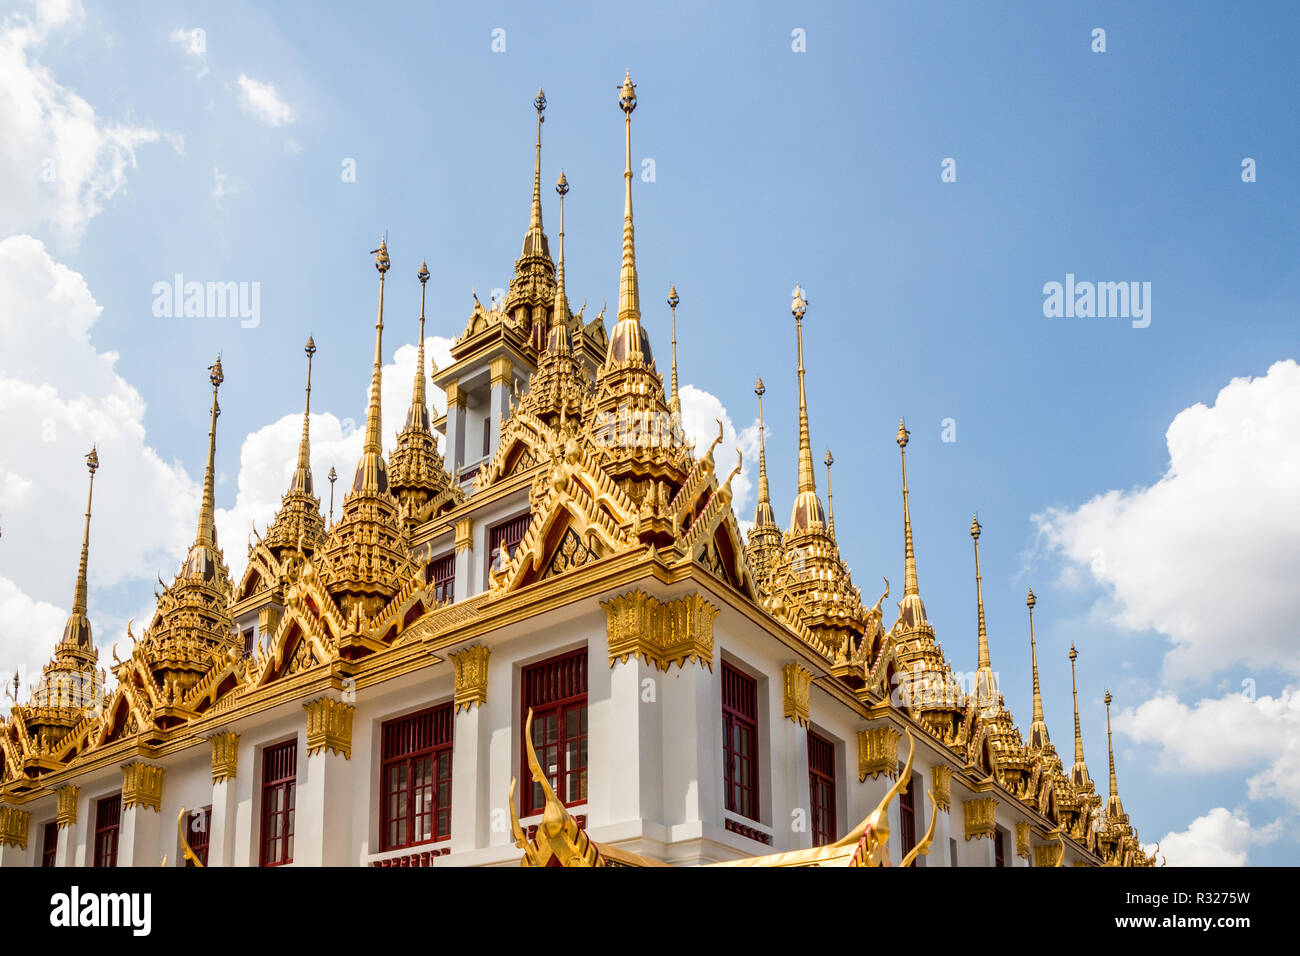 Les flèches d'or de Wat Ratchanadda, Loha Prasat, Bangkok, Thaïlande. Les 37 clochers tout métal symbolisent les 37 vertus qui mènent à l'illumination. Banque D'Images